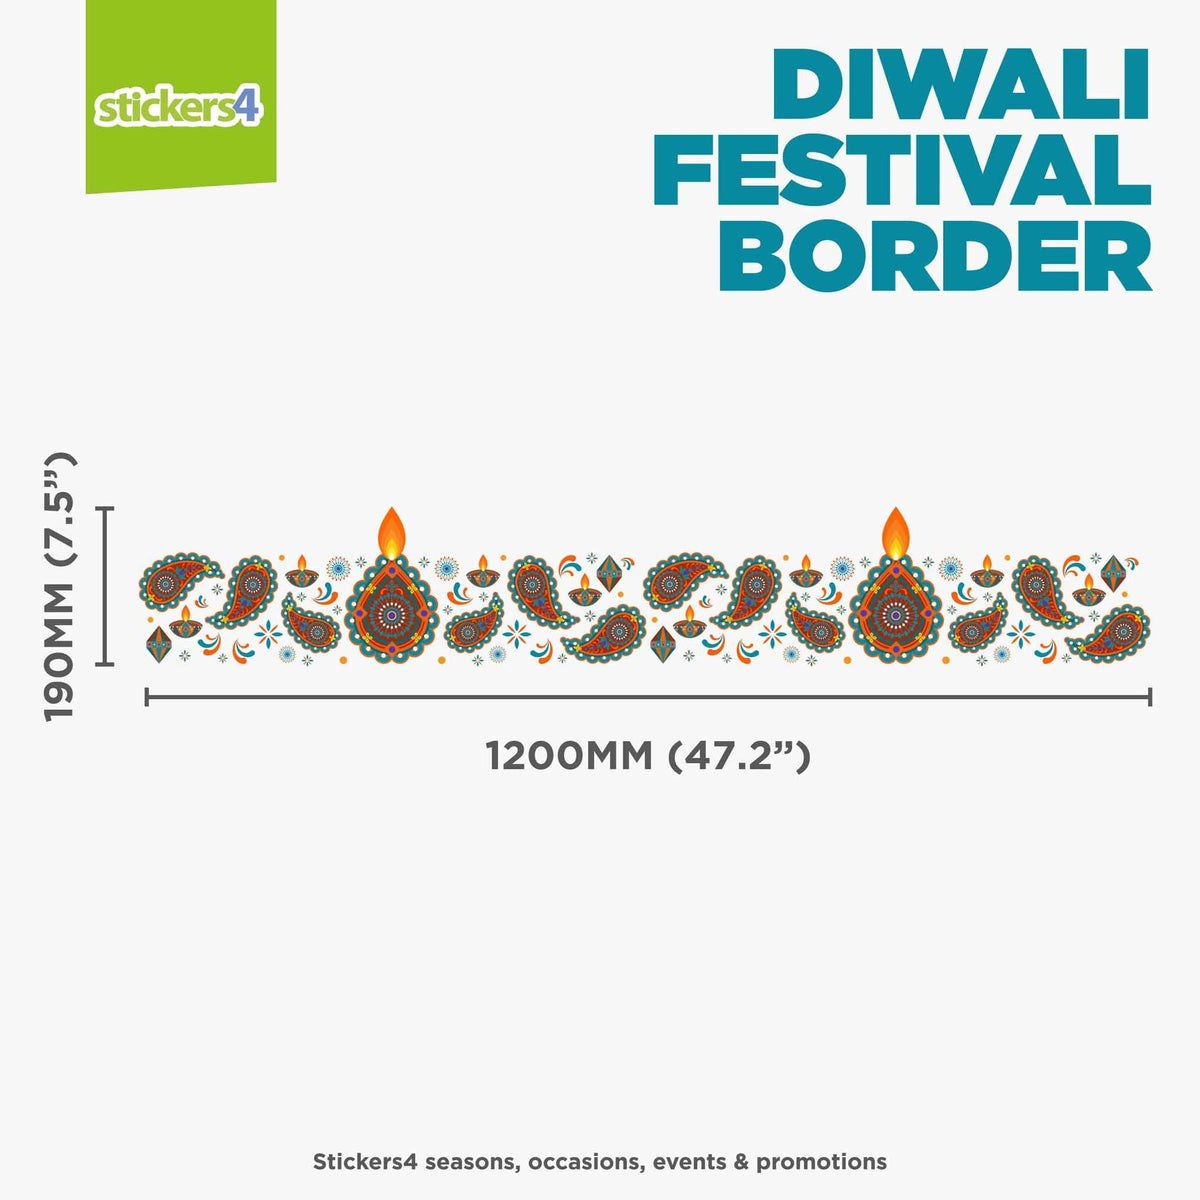 Diwali Festival Border Window Sticker Diwali Window Displays